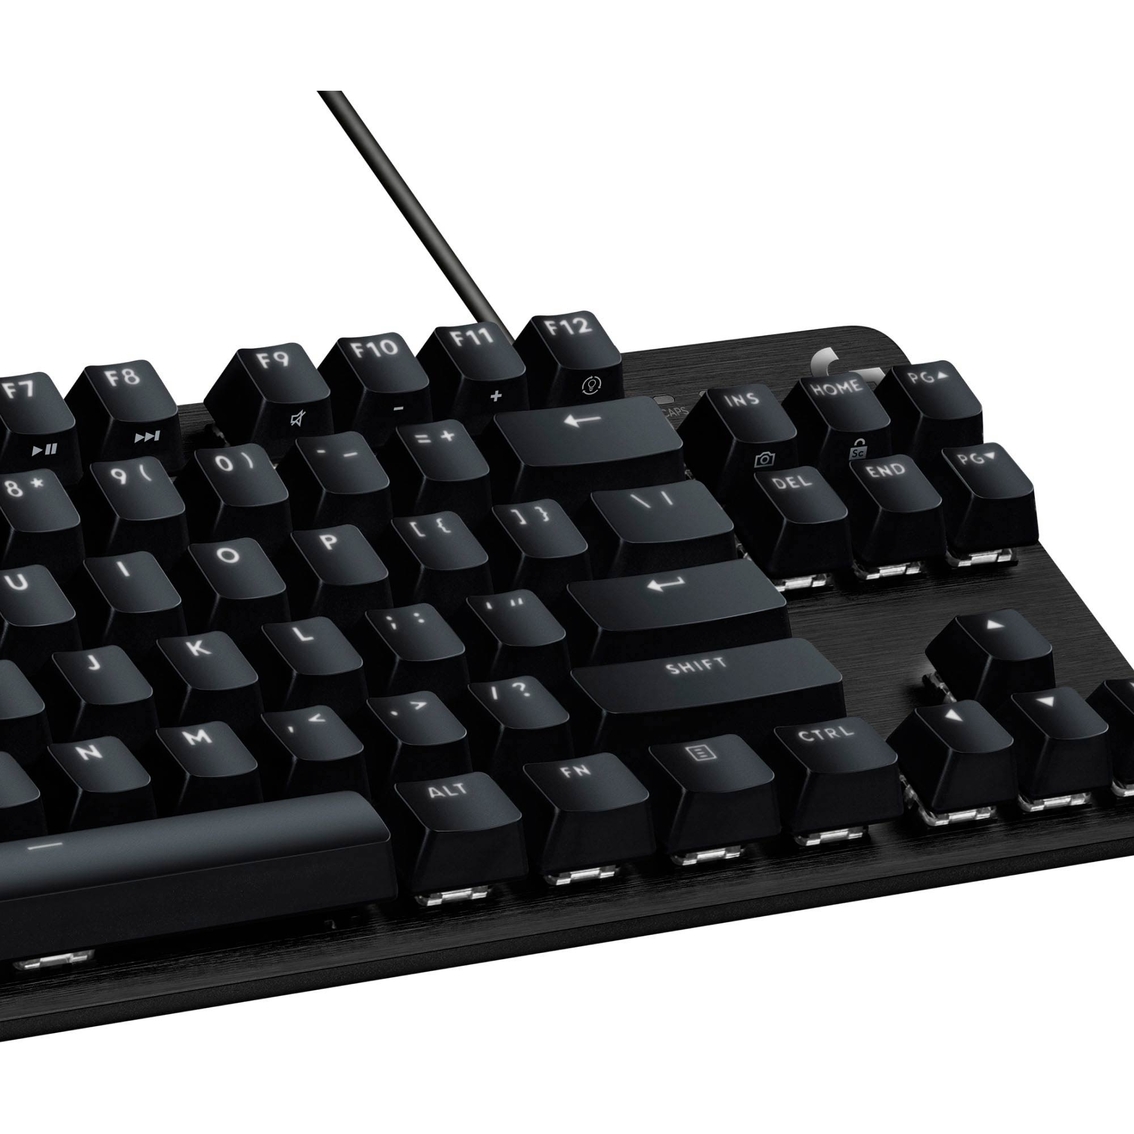 Logitech G413 SE TKL Mechanical Gaming Keyboard - Image 3 of 6